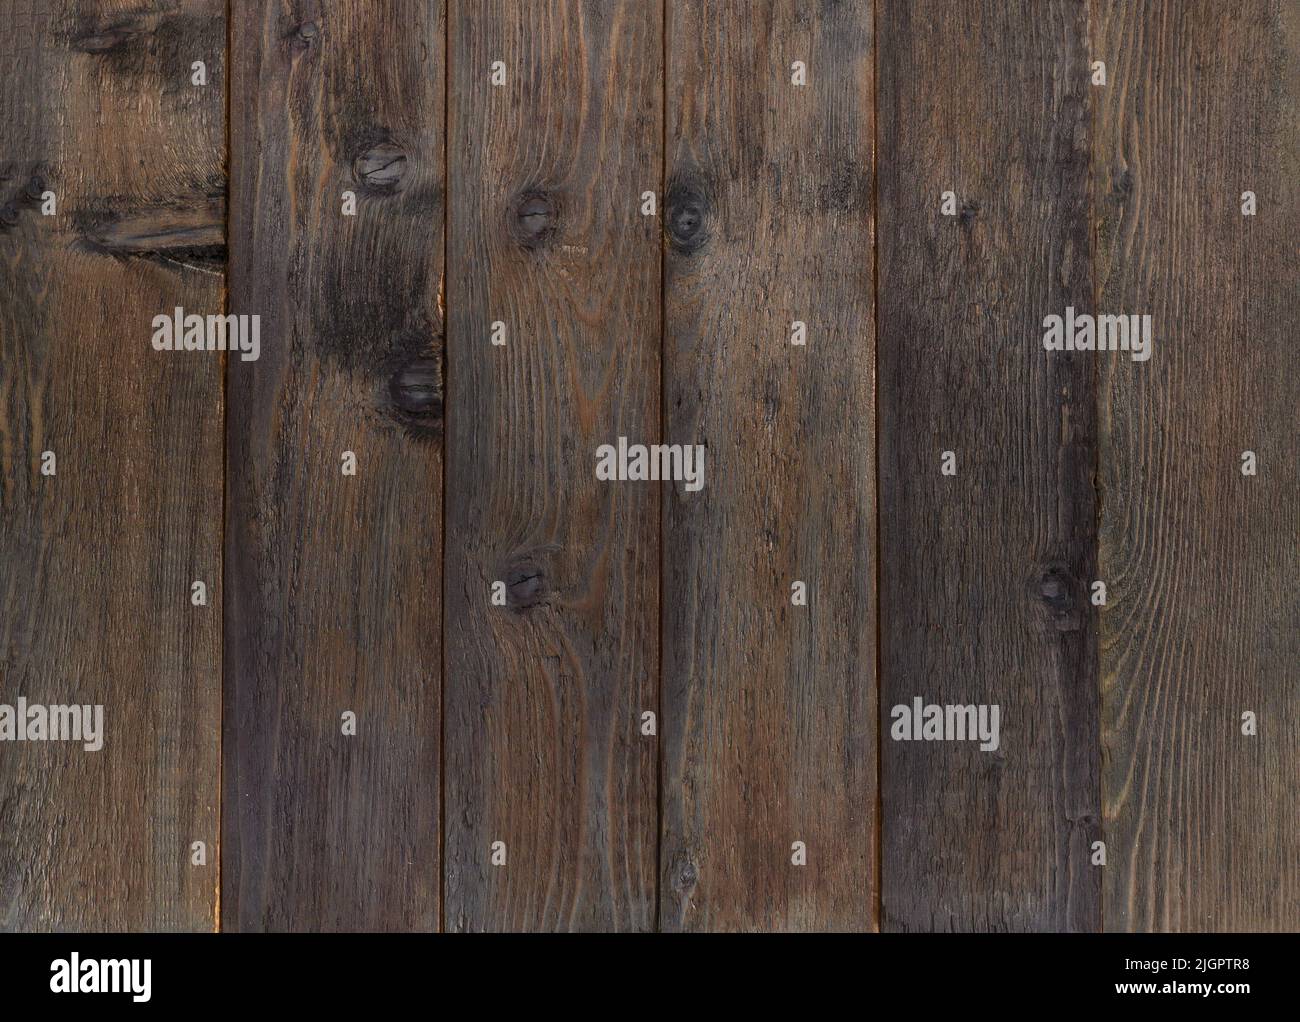 textura de madera gris oscura marrón viejo - fondo de madera Foto de stock